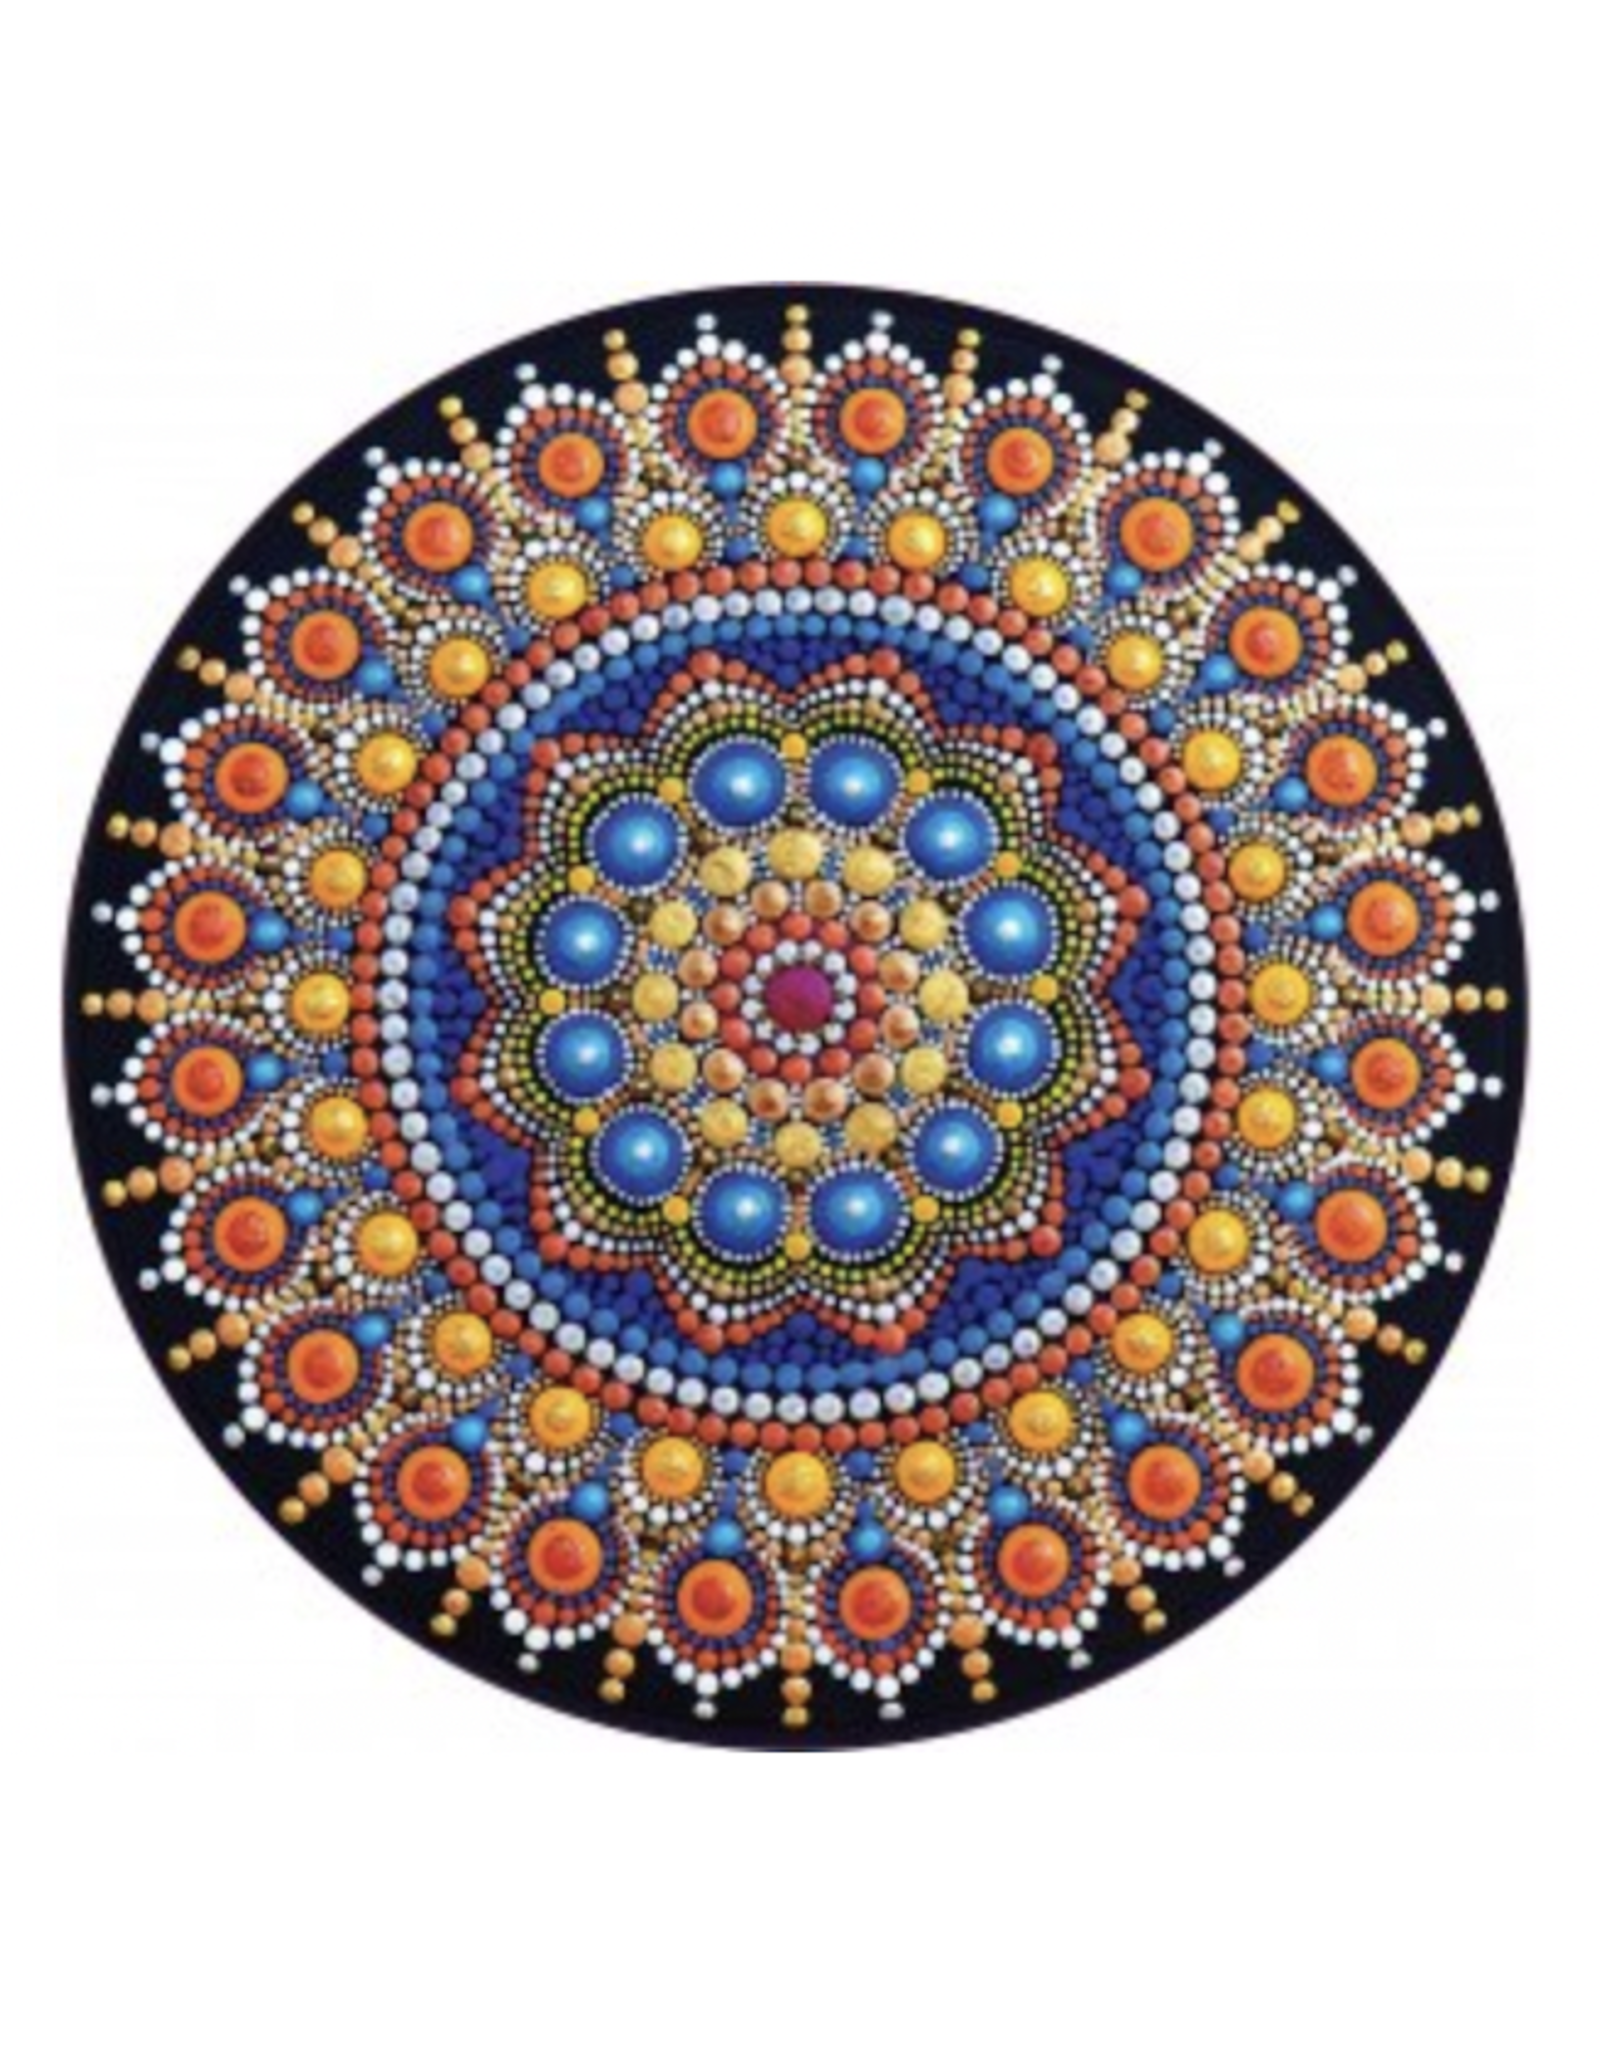 Magical Mandala Round Puzzle - 1000 Piece